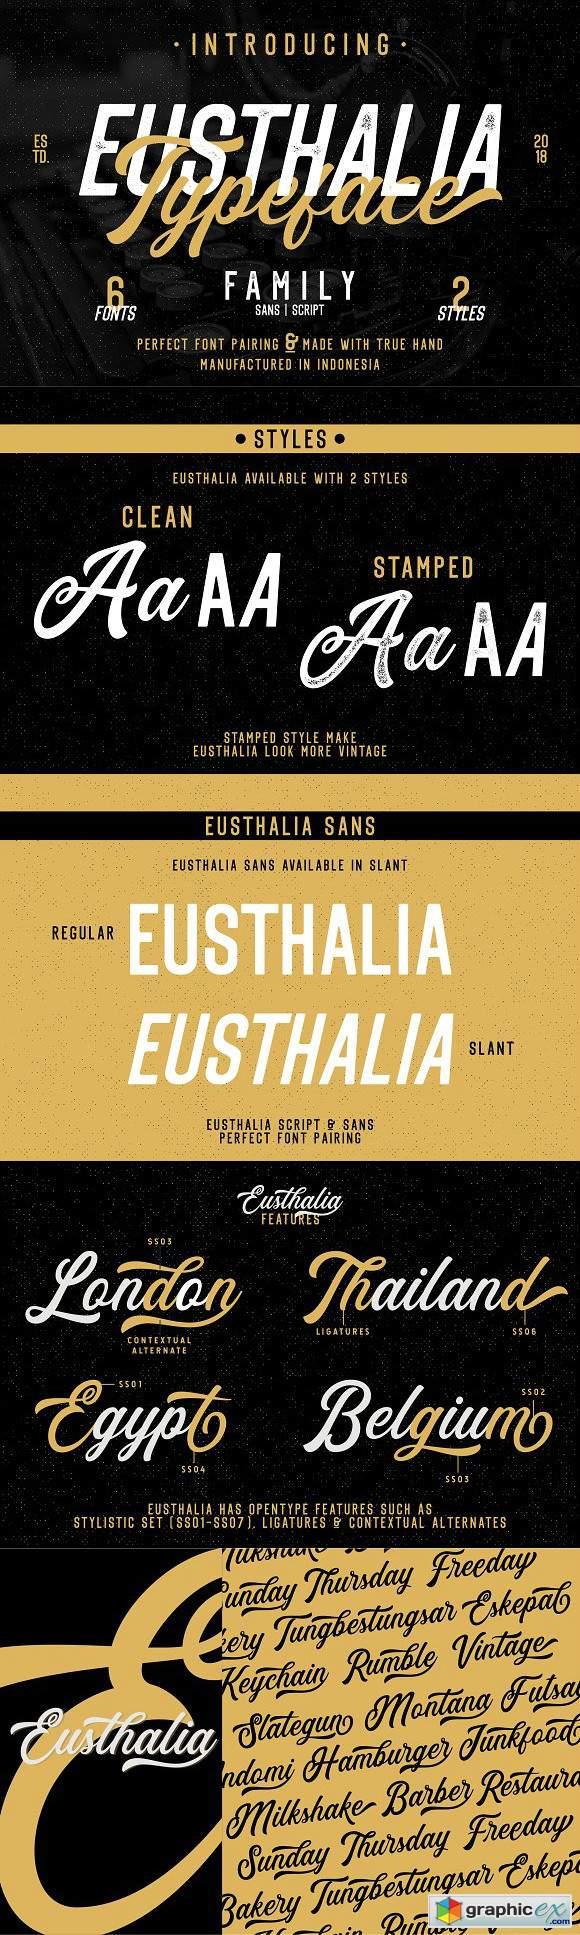 Eusthalia Typeface Family (6 Fonts)